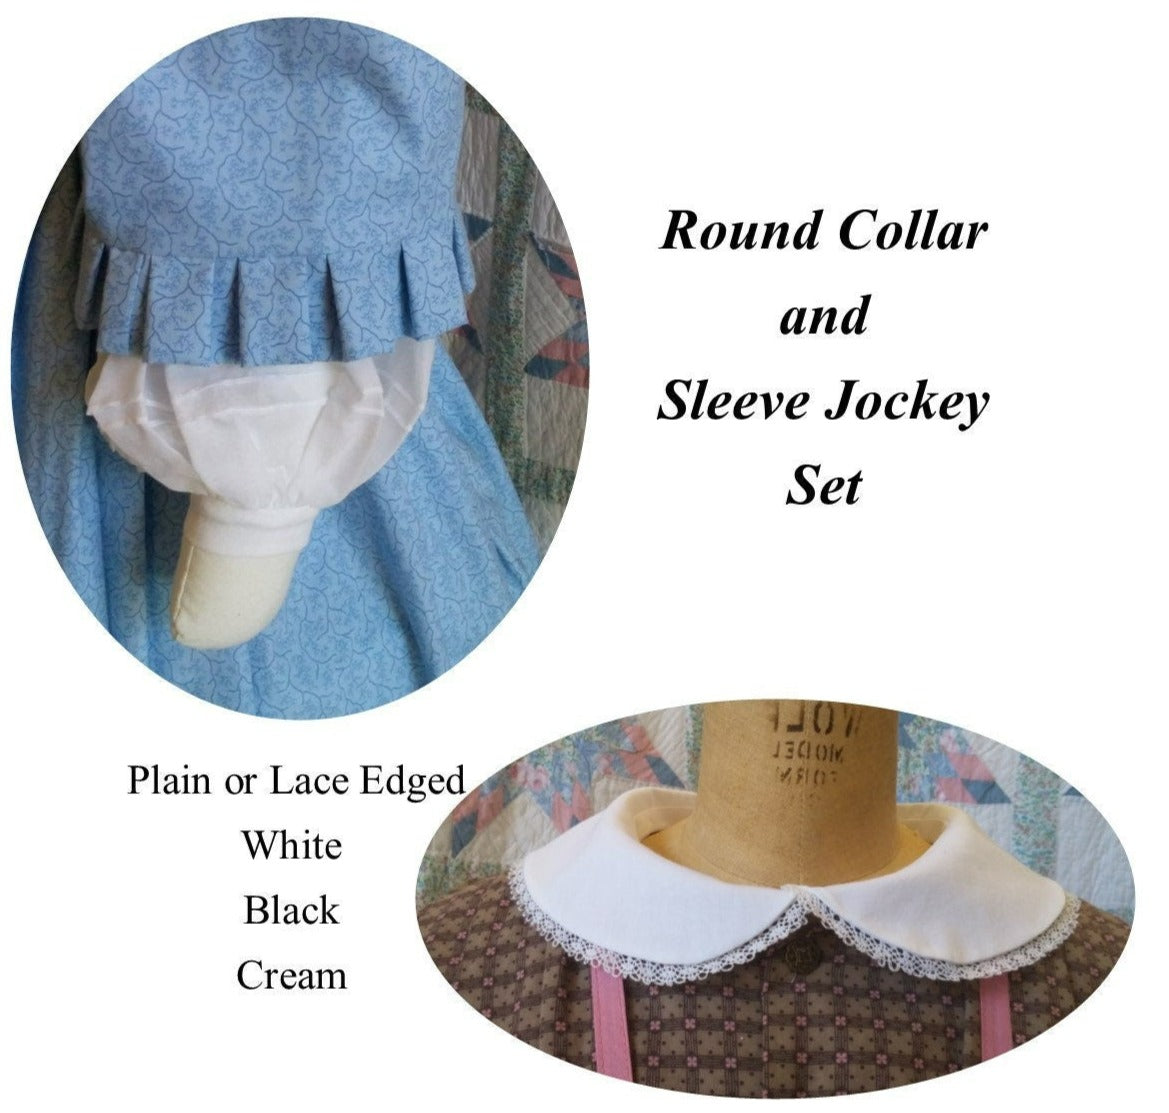 Round Collar and Sleeve Jockey - Undersleeve Set